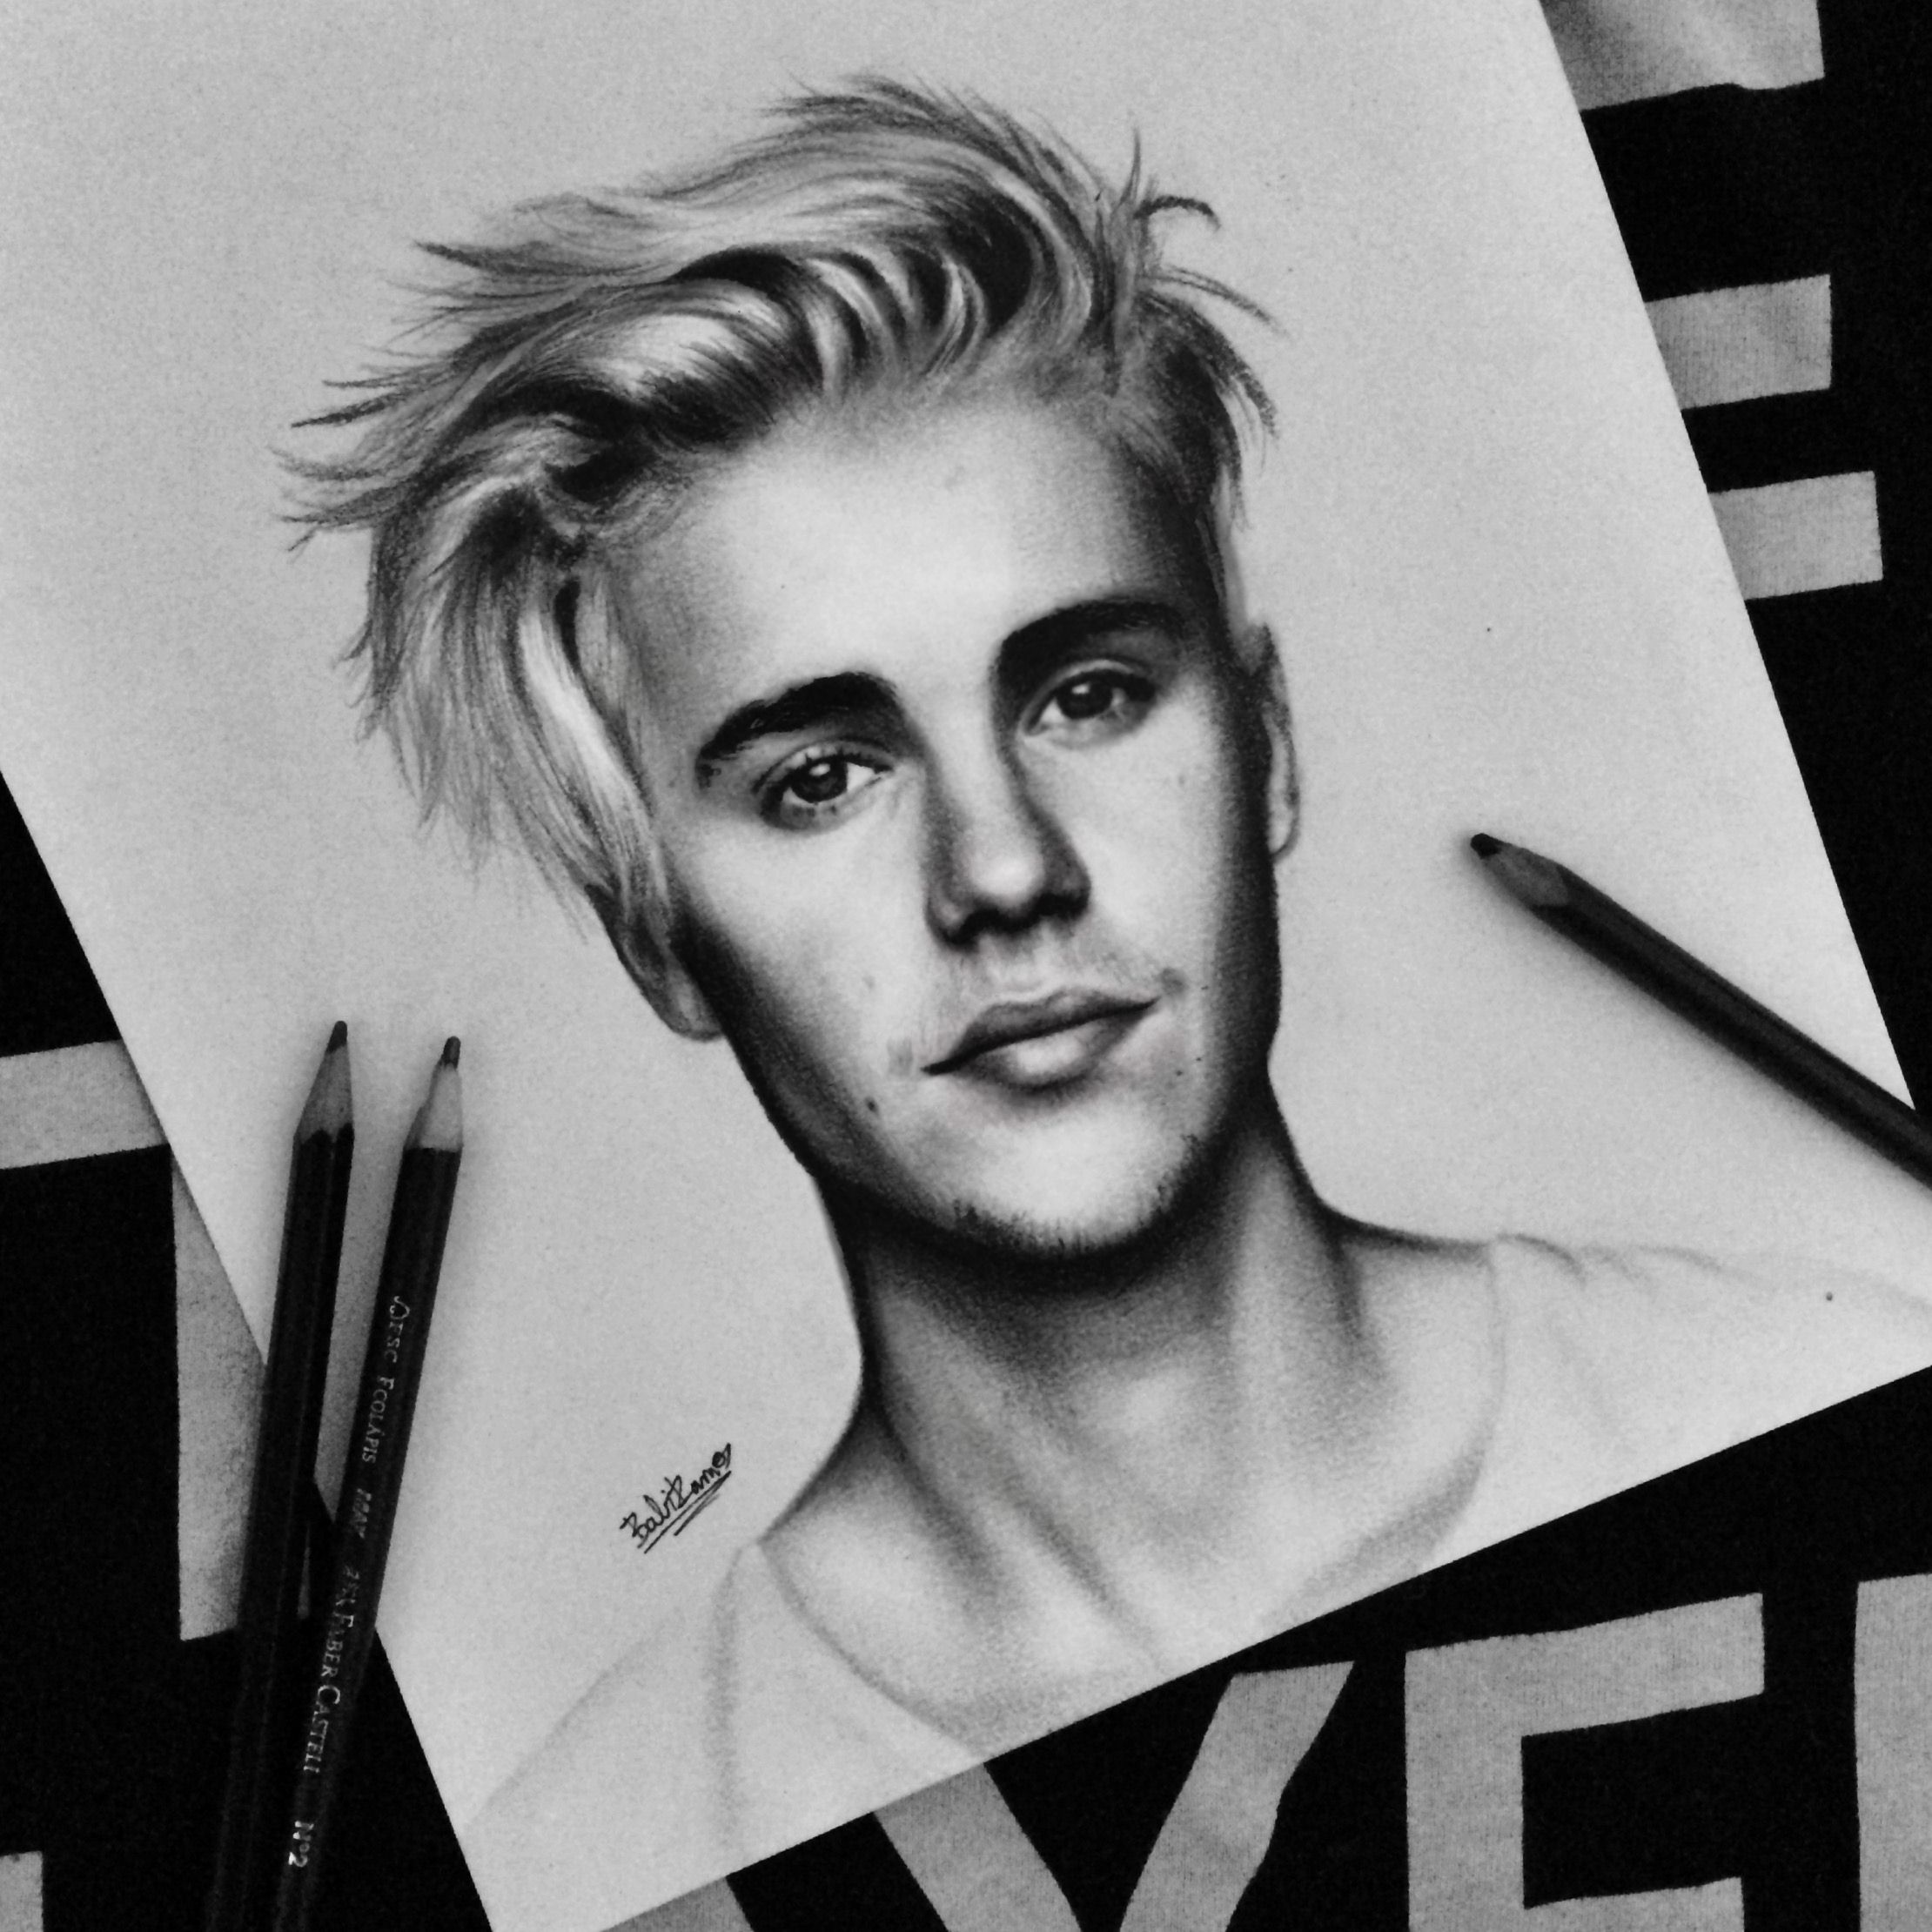 Portrait of Justin Bieber by cesarcrr on Stars Portraits